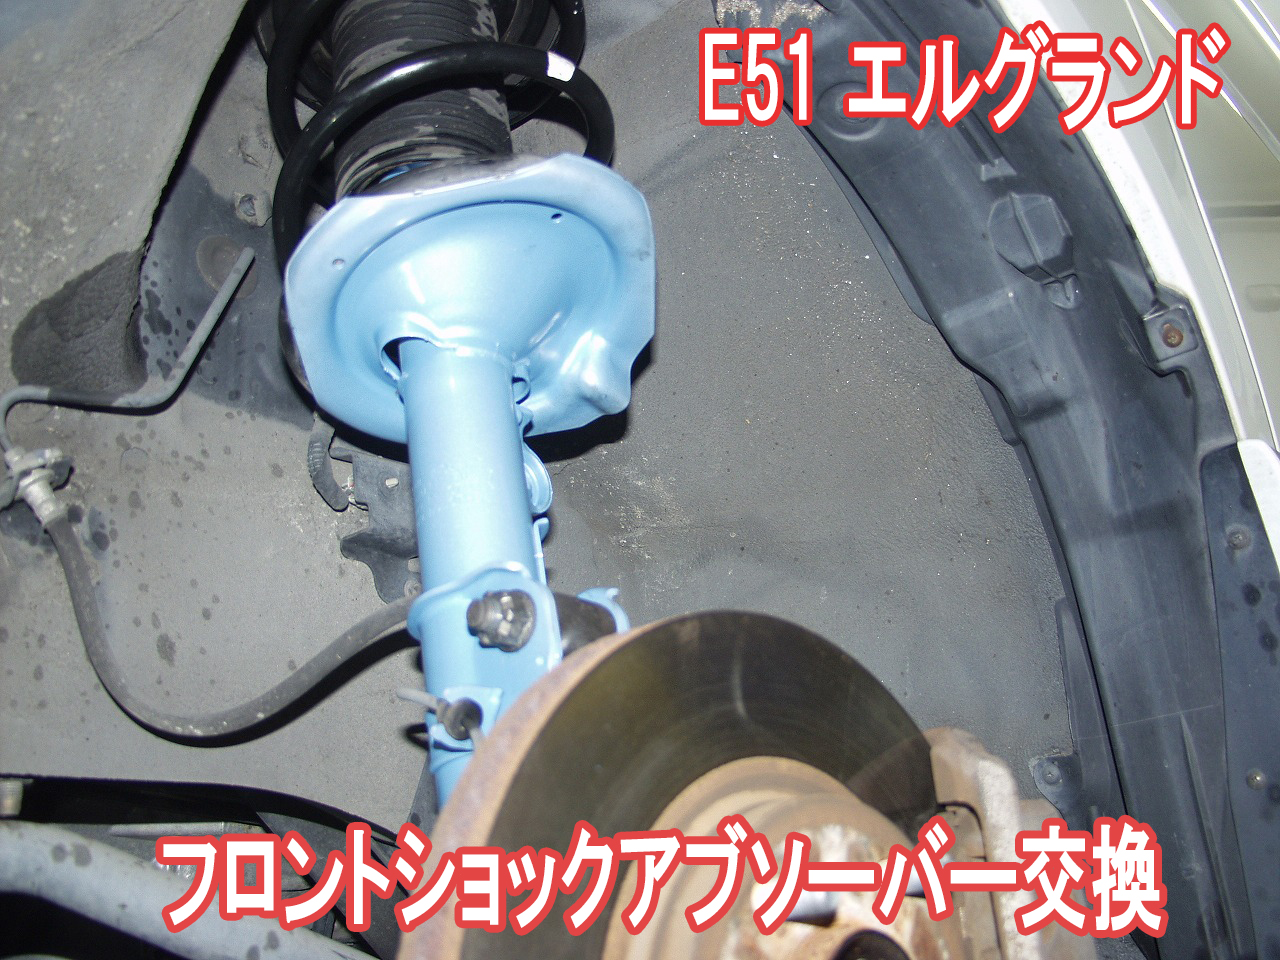 E51 エルグランドのフロントショックアブソーバーを交換しました。